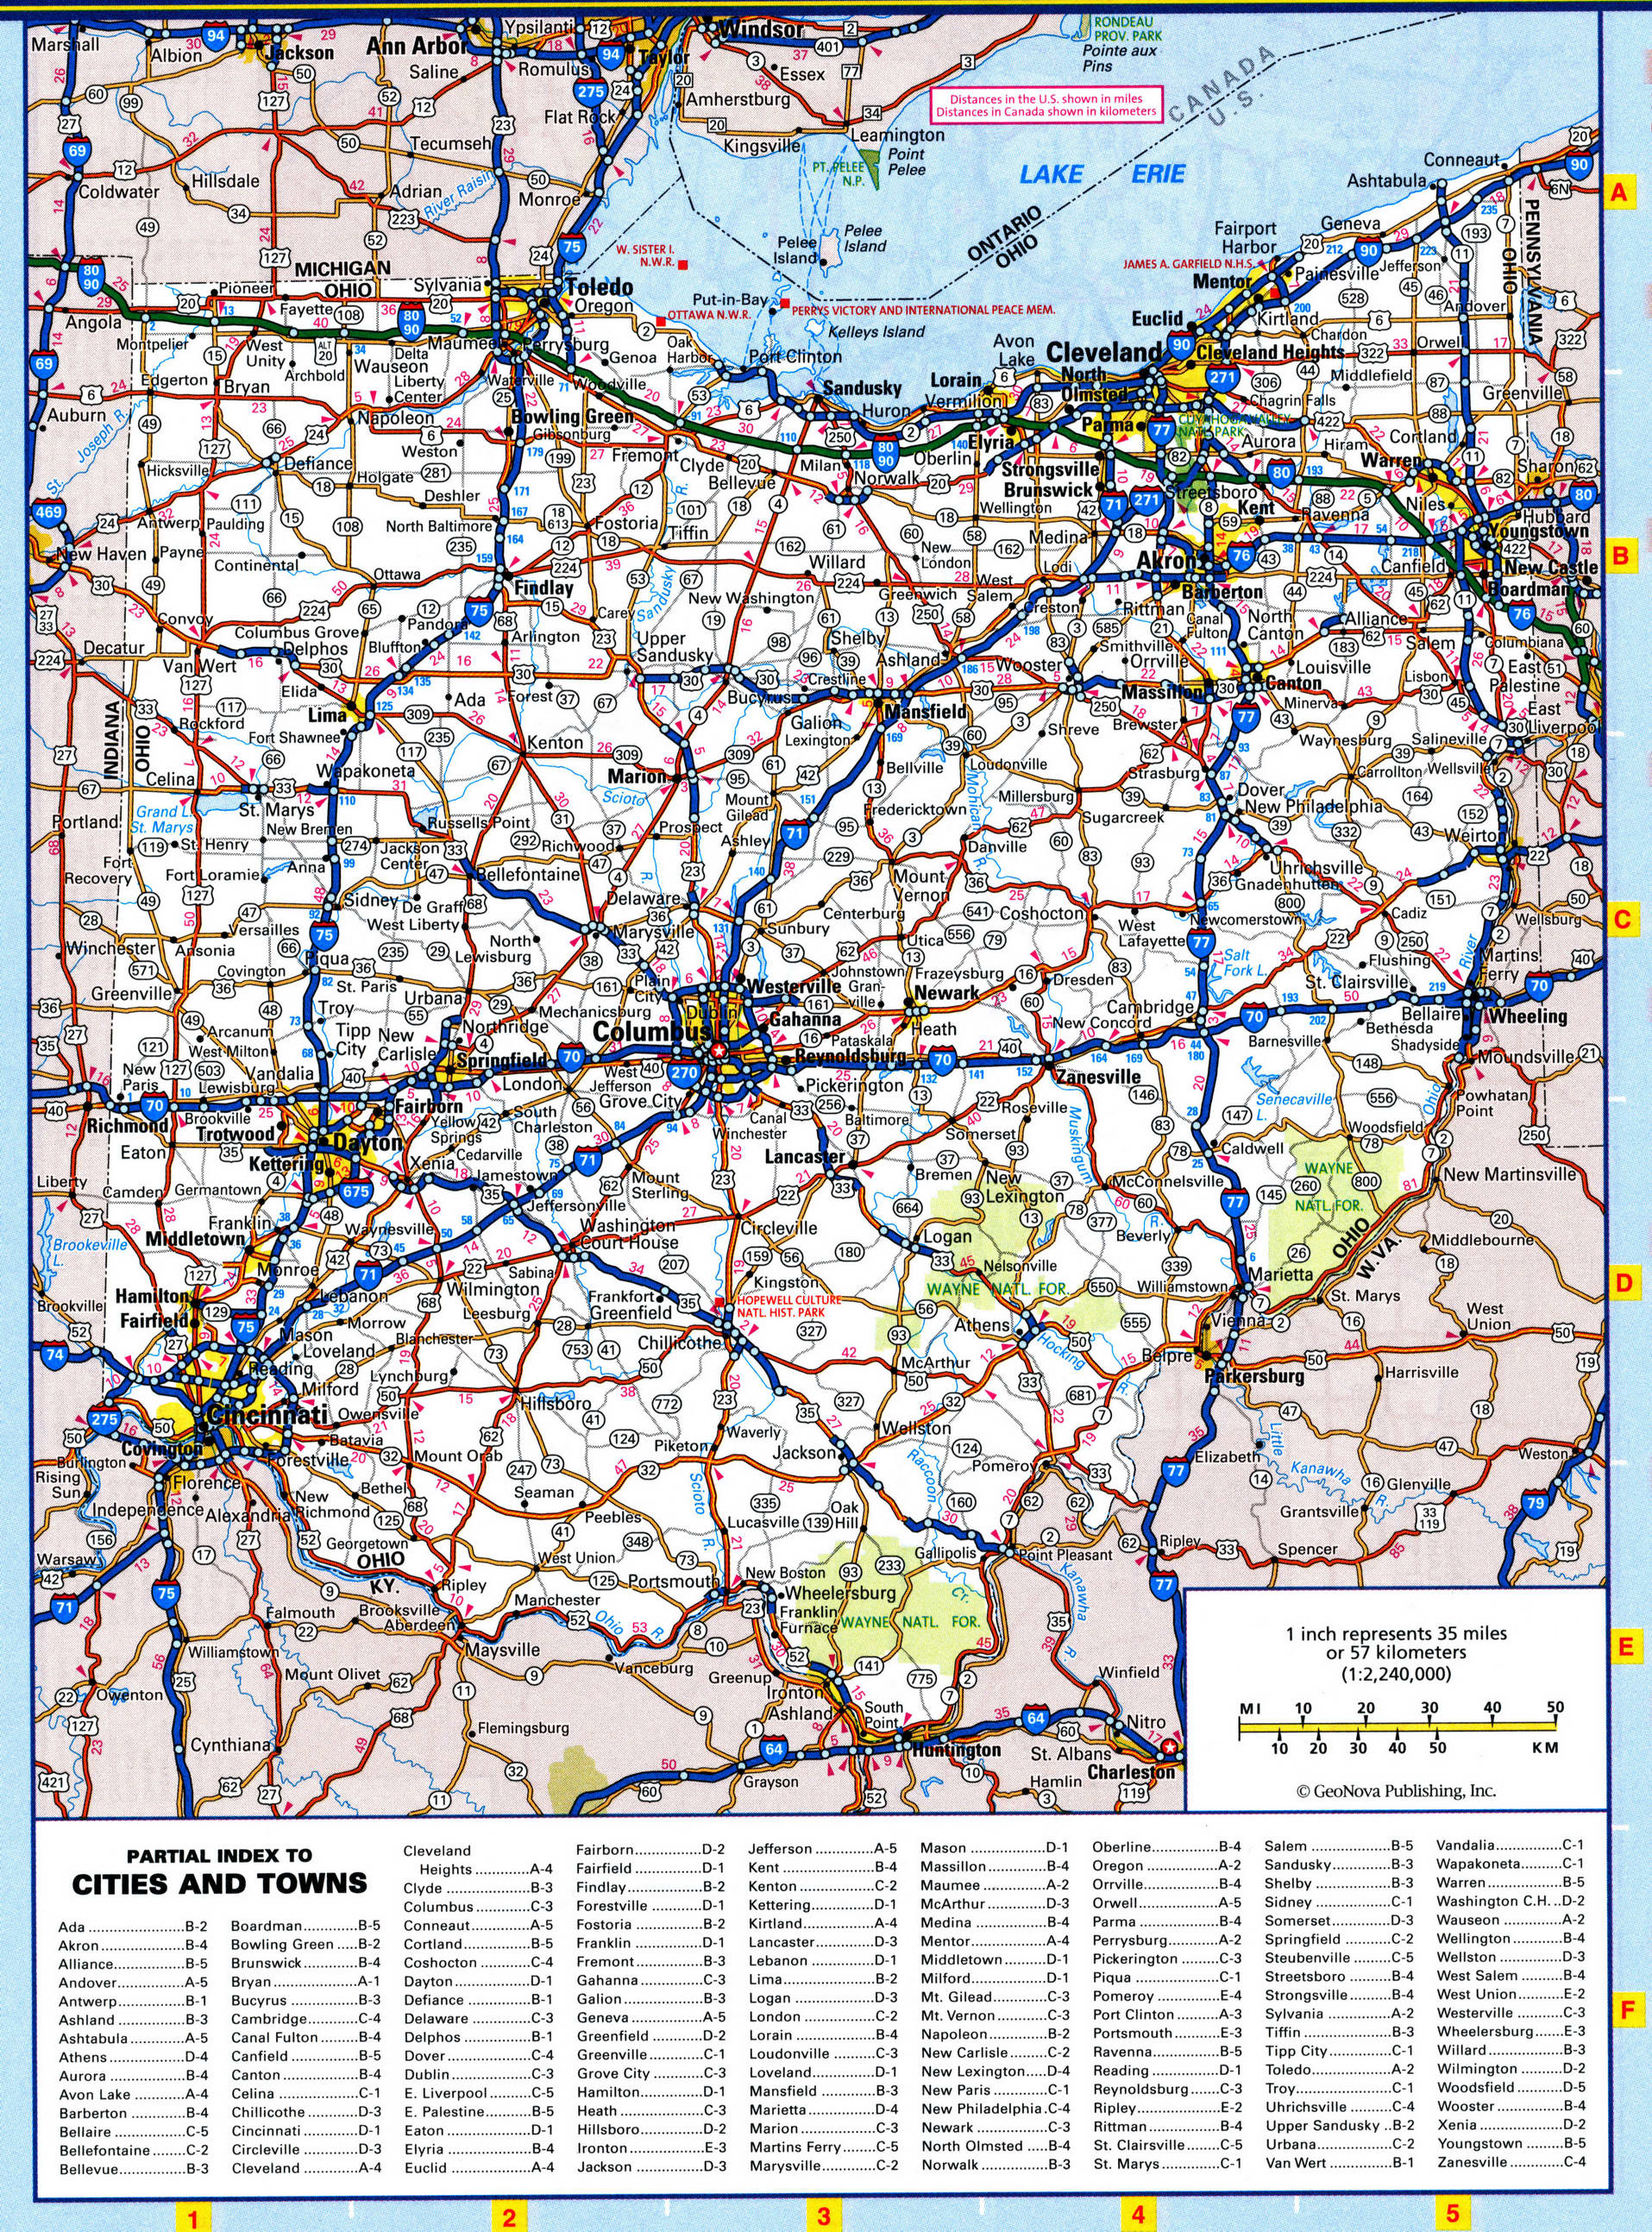 Ohio highway map